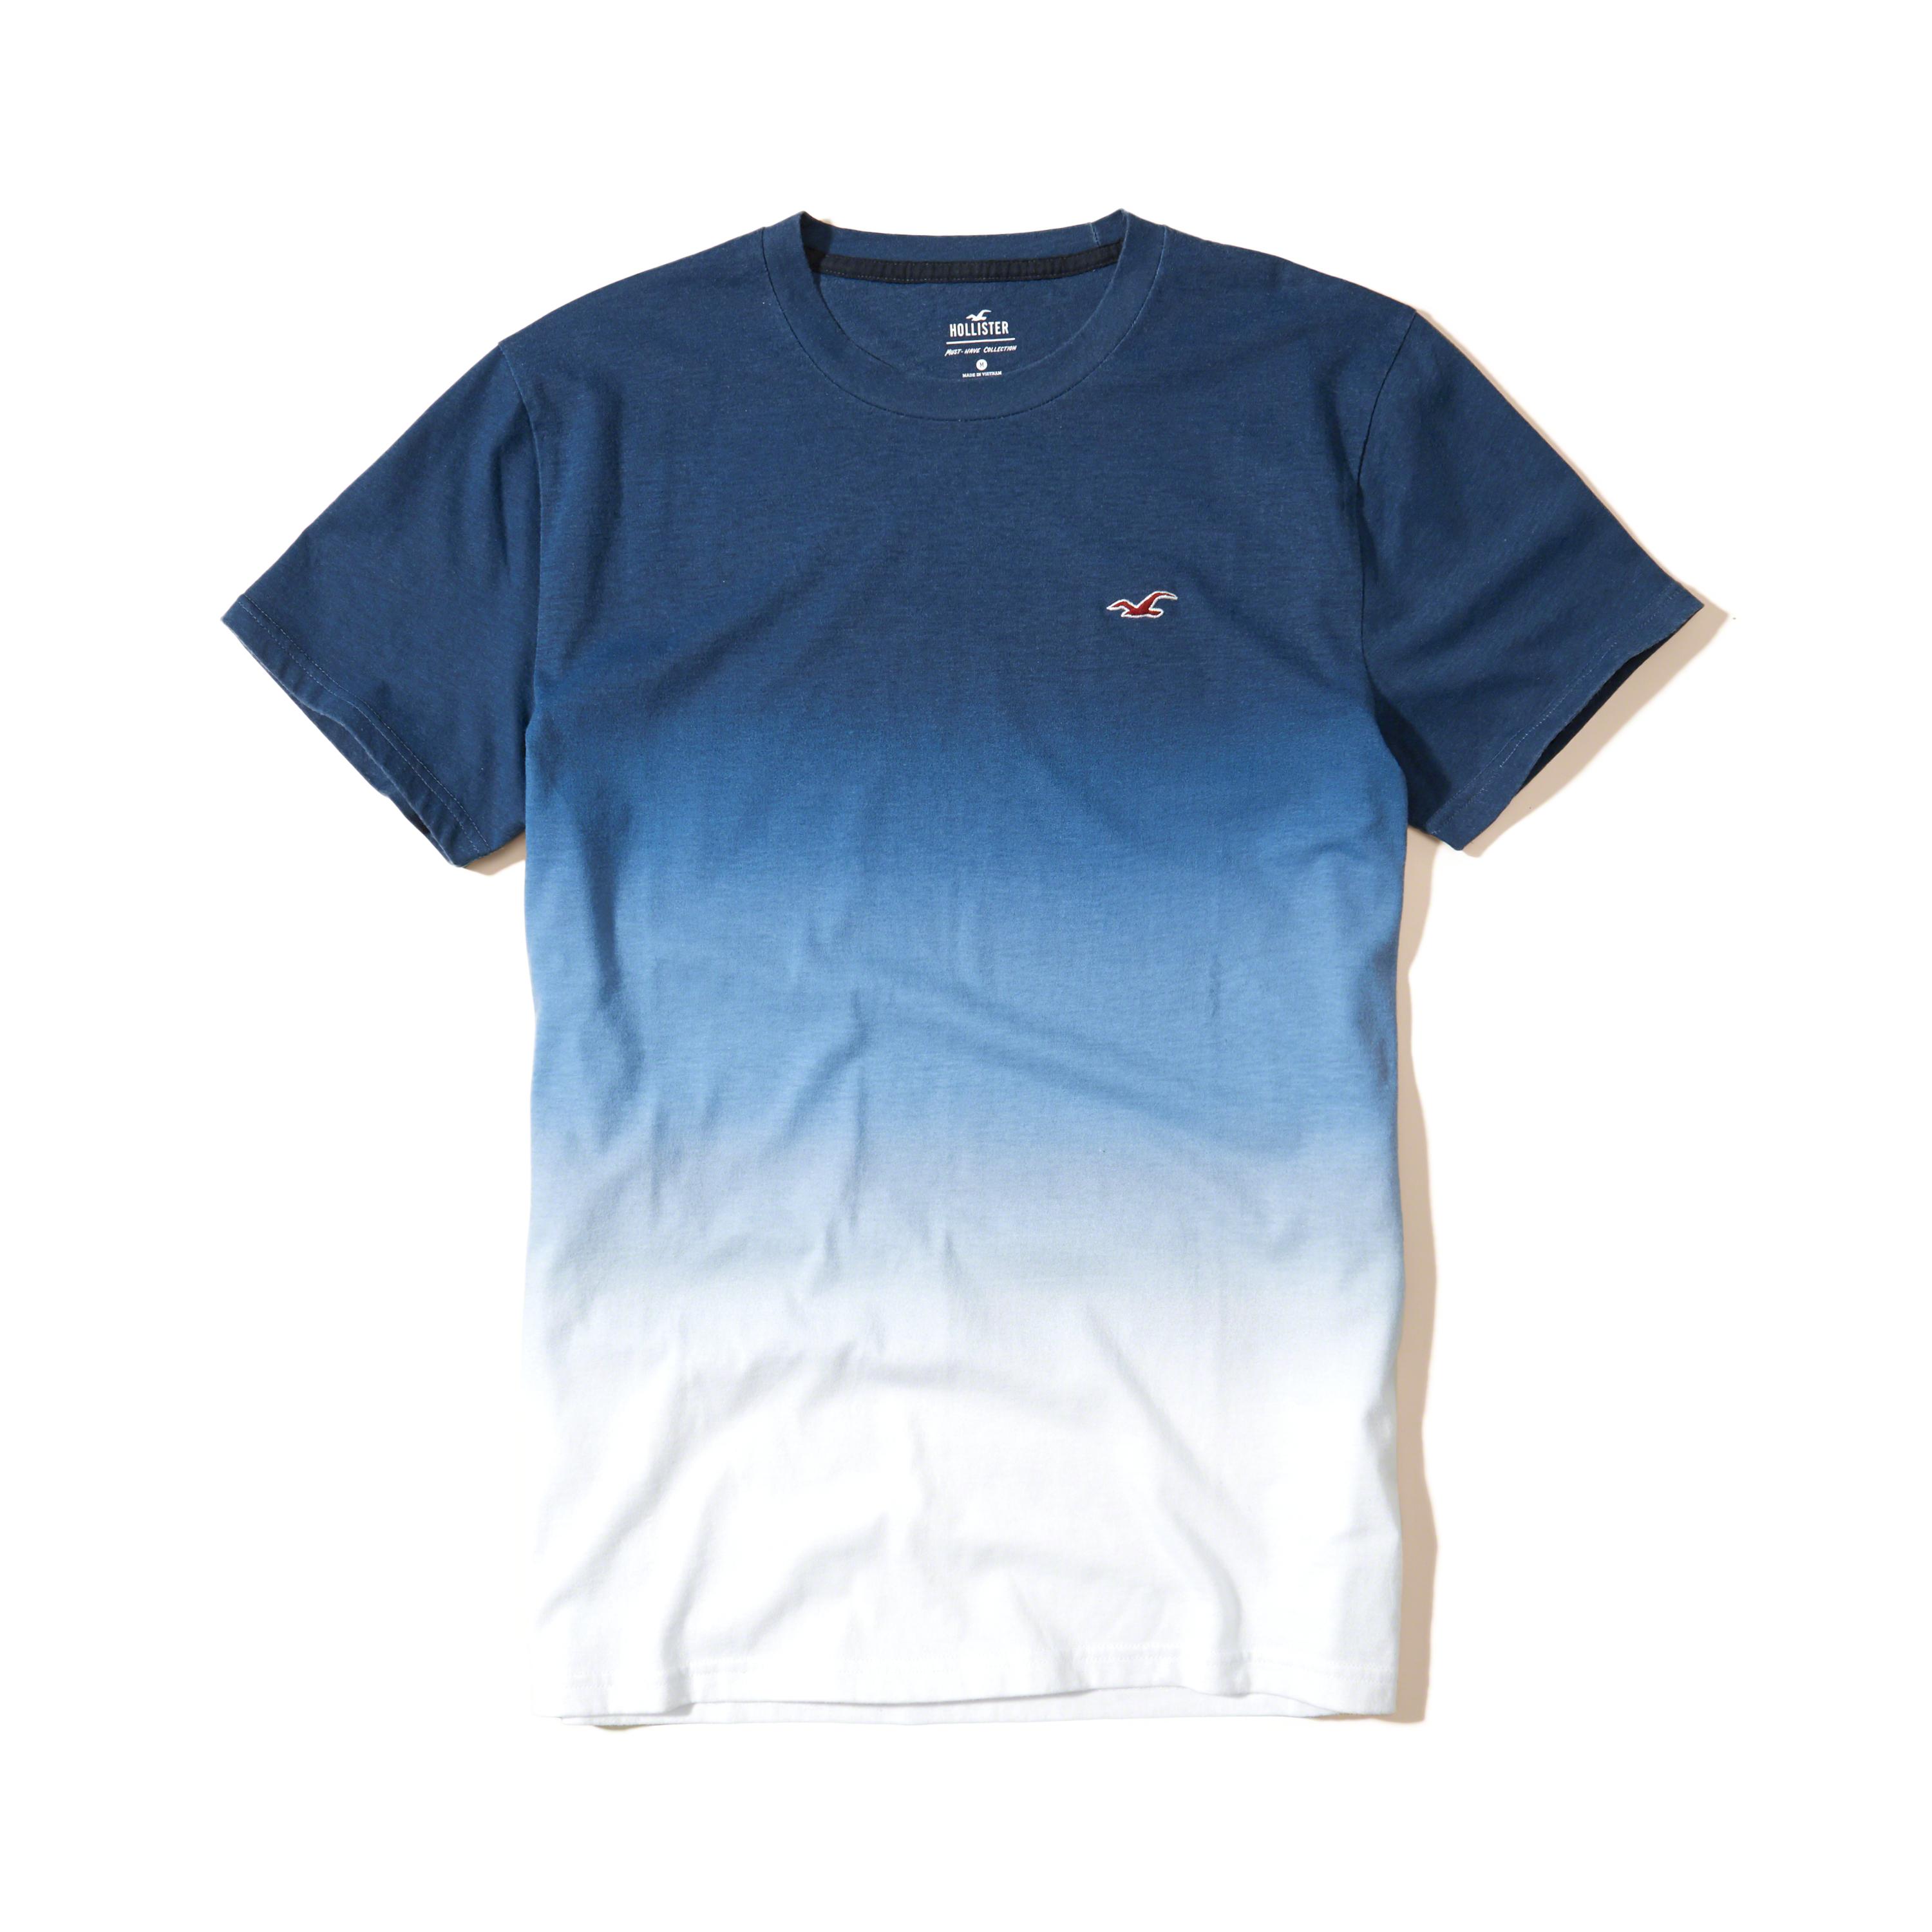 hollister blue and white shirt Cheaper 